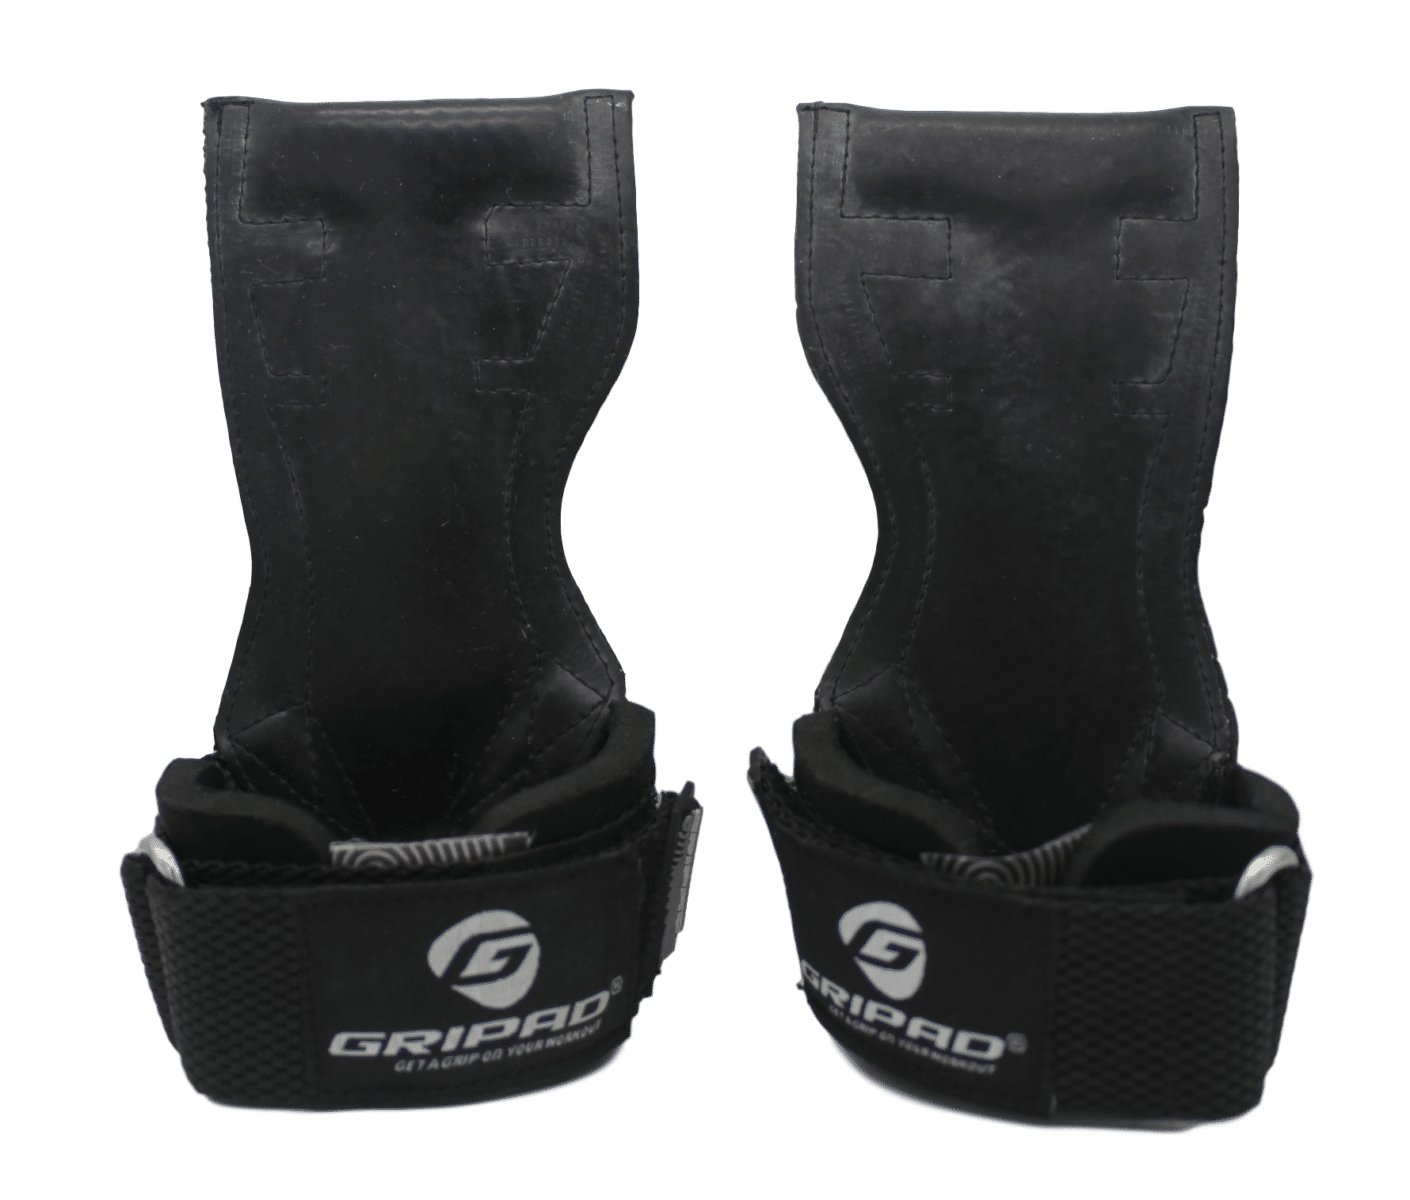 Workout Grips | Gripad PRO Lifting Grips Black Large